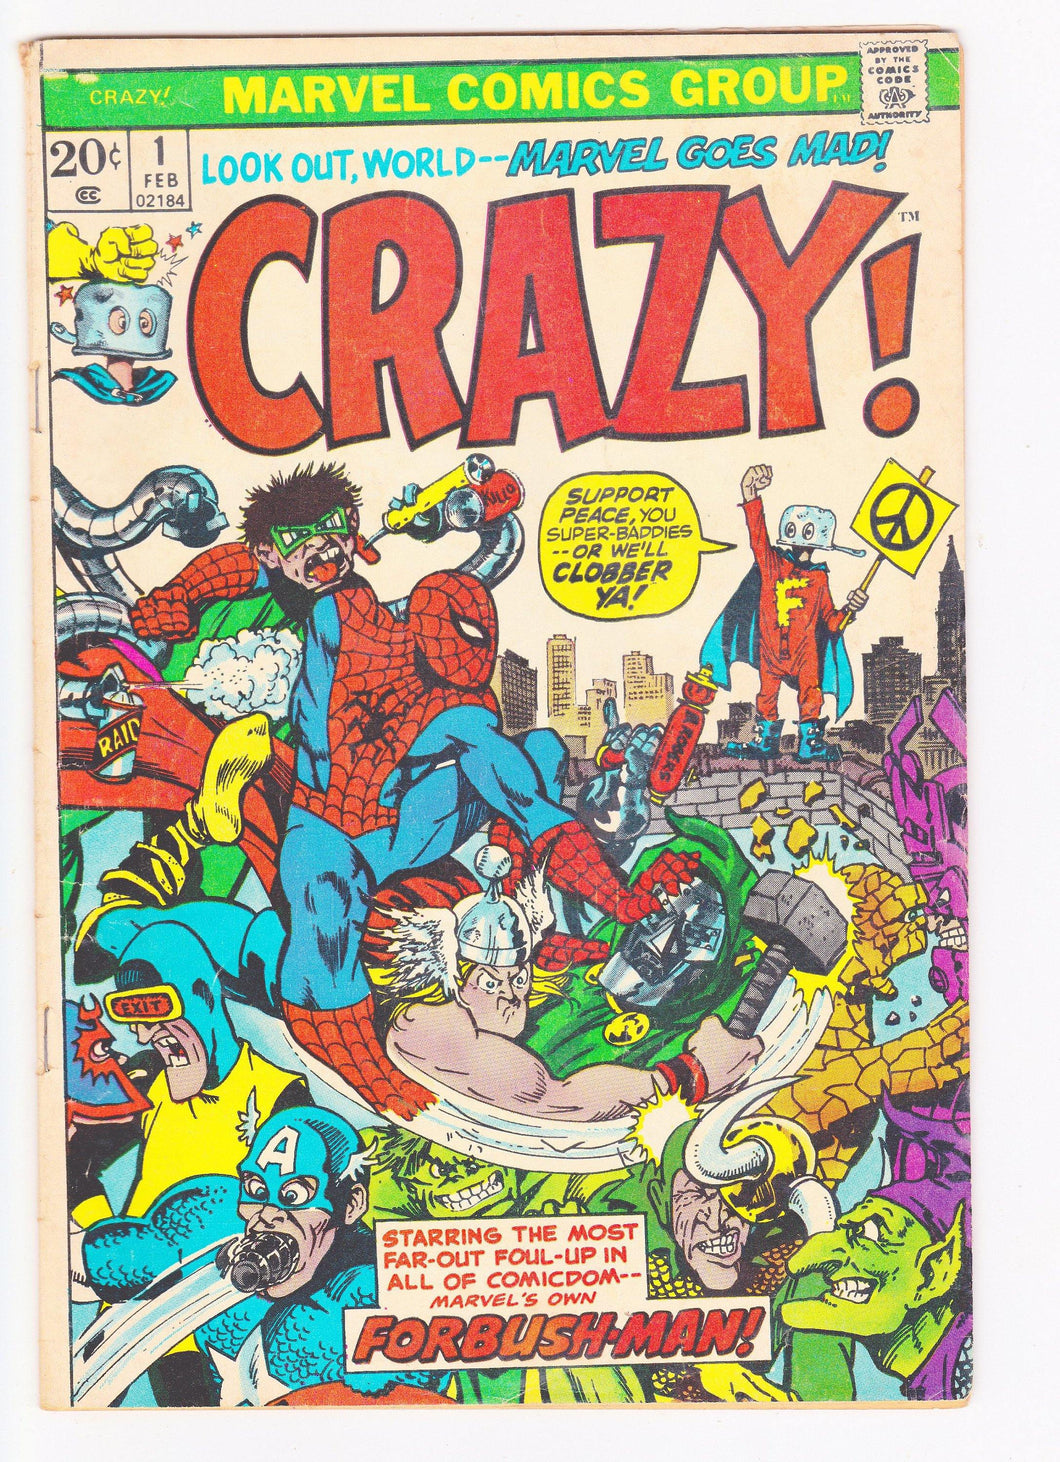 Crazy! Volume 1 Issue 1 February 1973 Humor Satire Parody Comic Book Marvel Comics Forbush-Man - TulipStuff